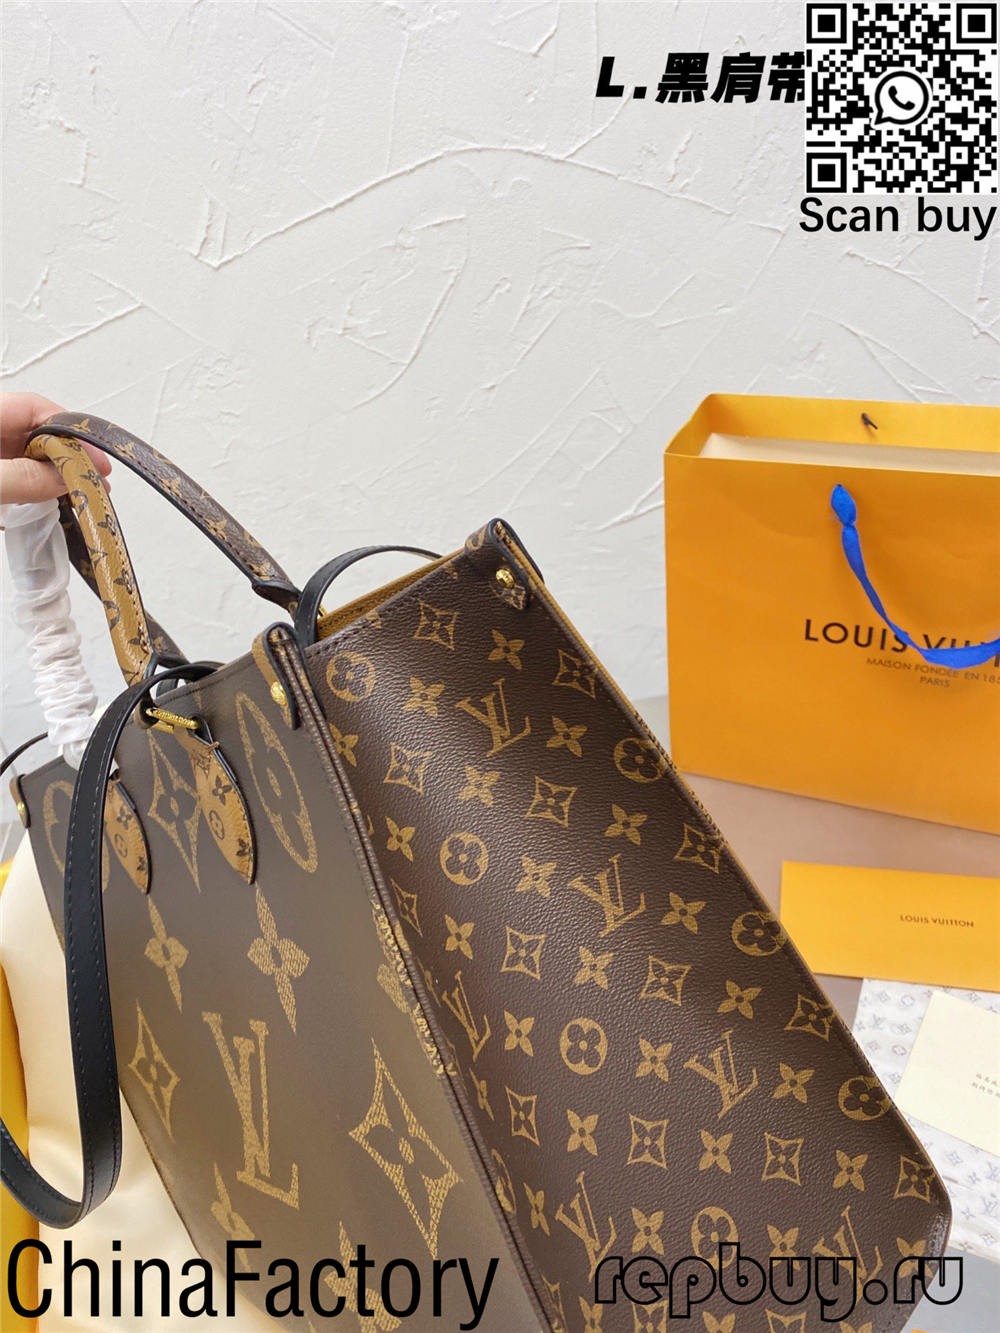 Louis Vuitton-ning sotib olish uchun eng yaxshi 12 ta eng sifatli replika sumkalari (2022 yil yangilangan)-Best Quality Fake Louis Vuitton Bag Online Store, Replica designer bag ru